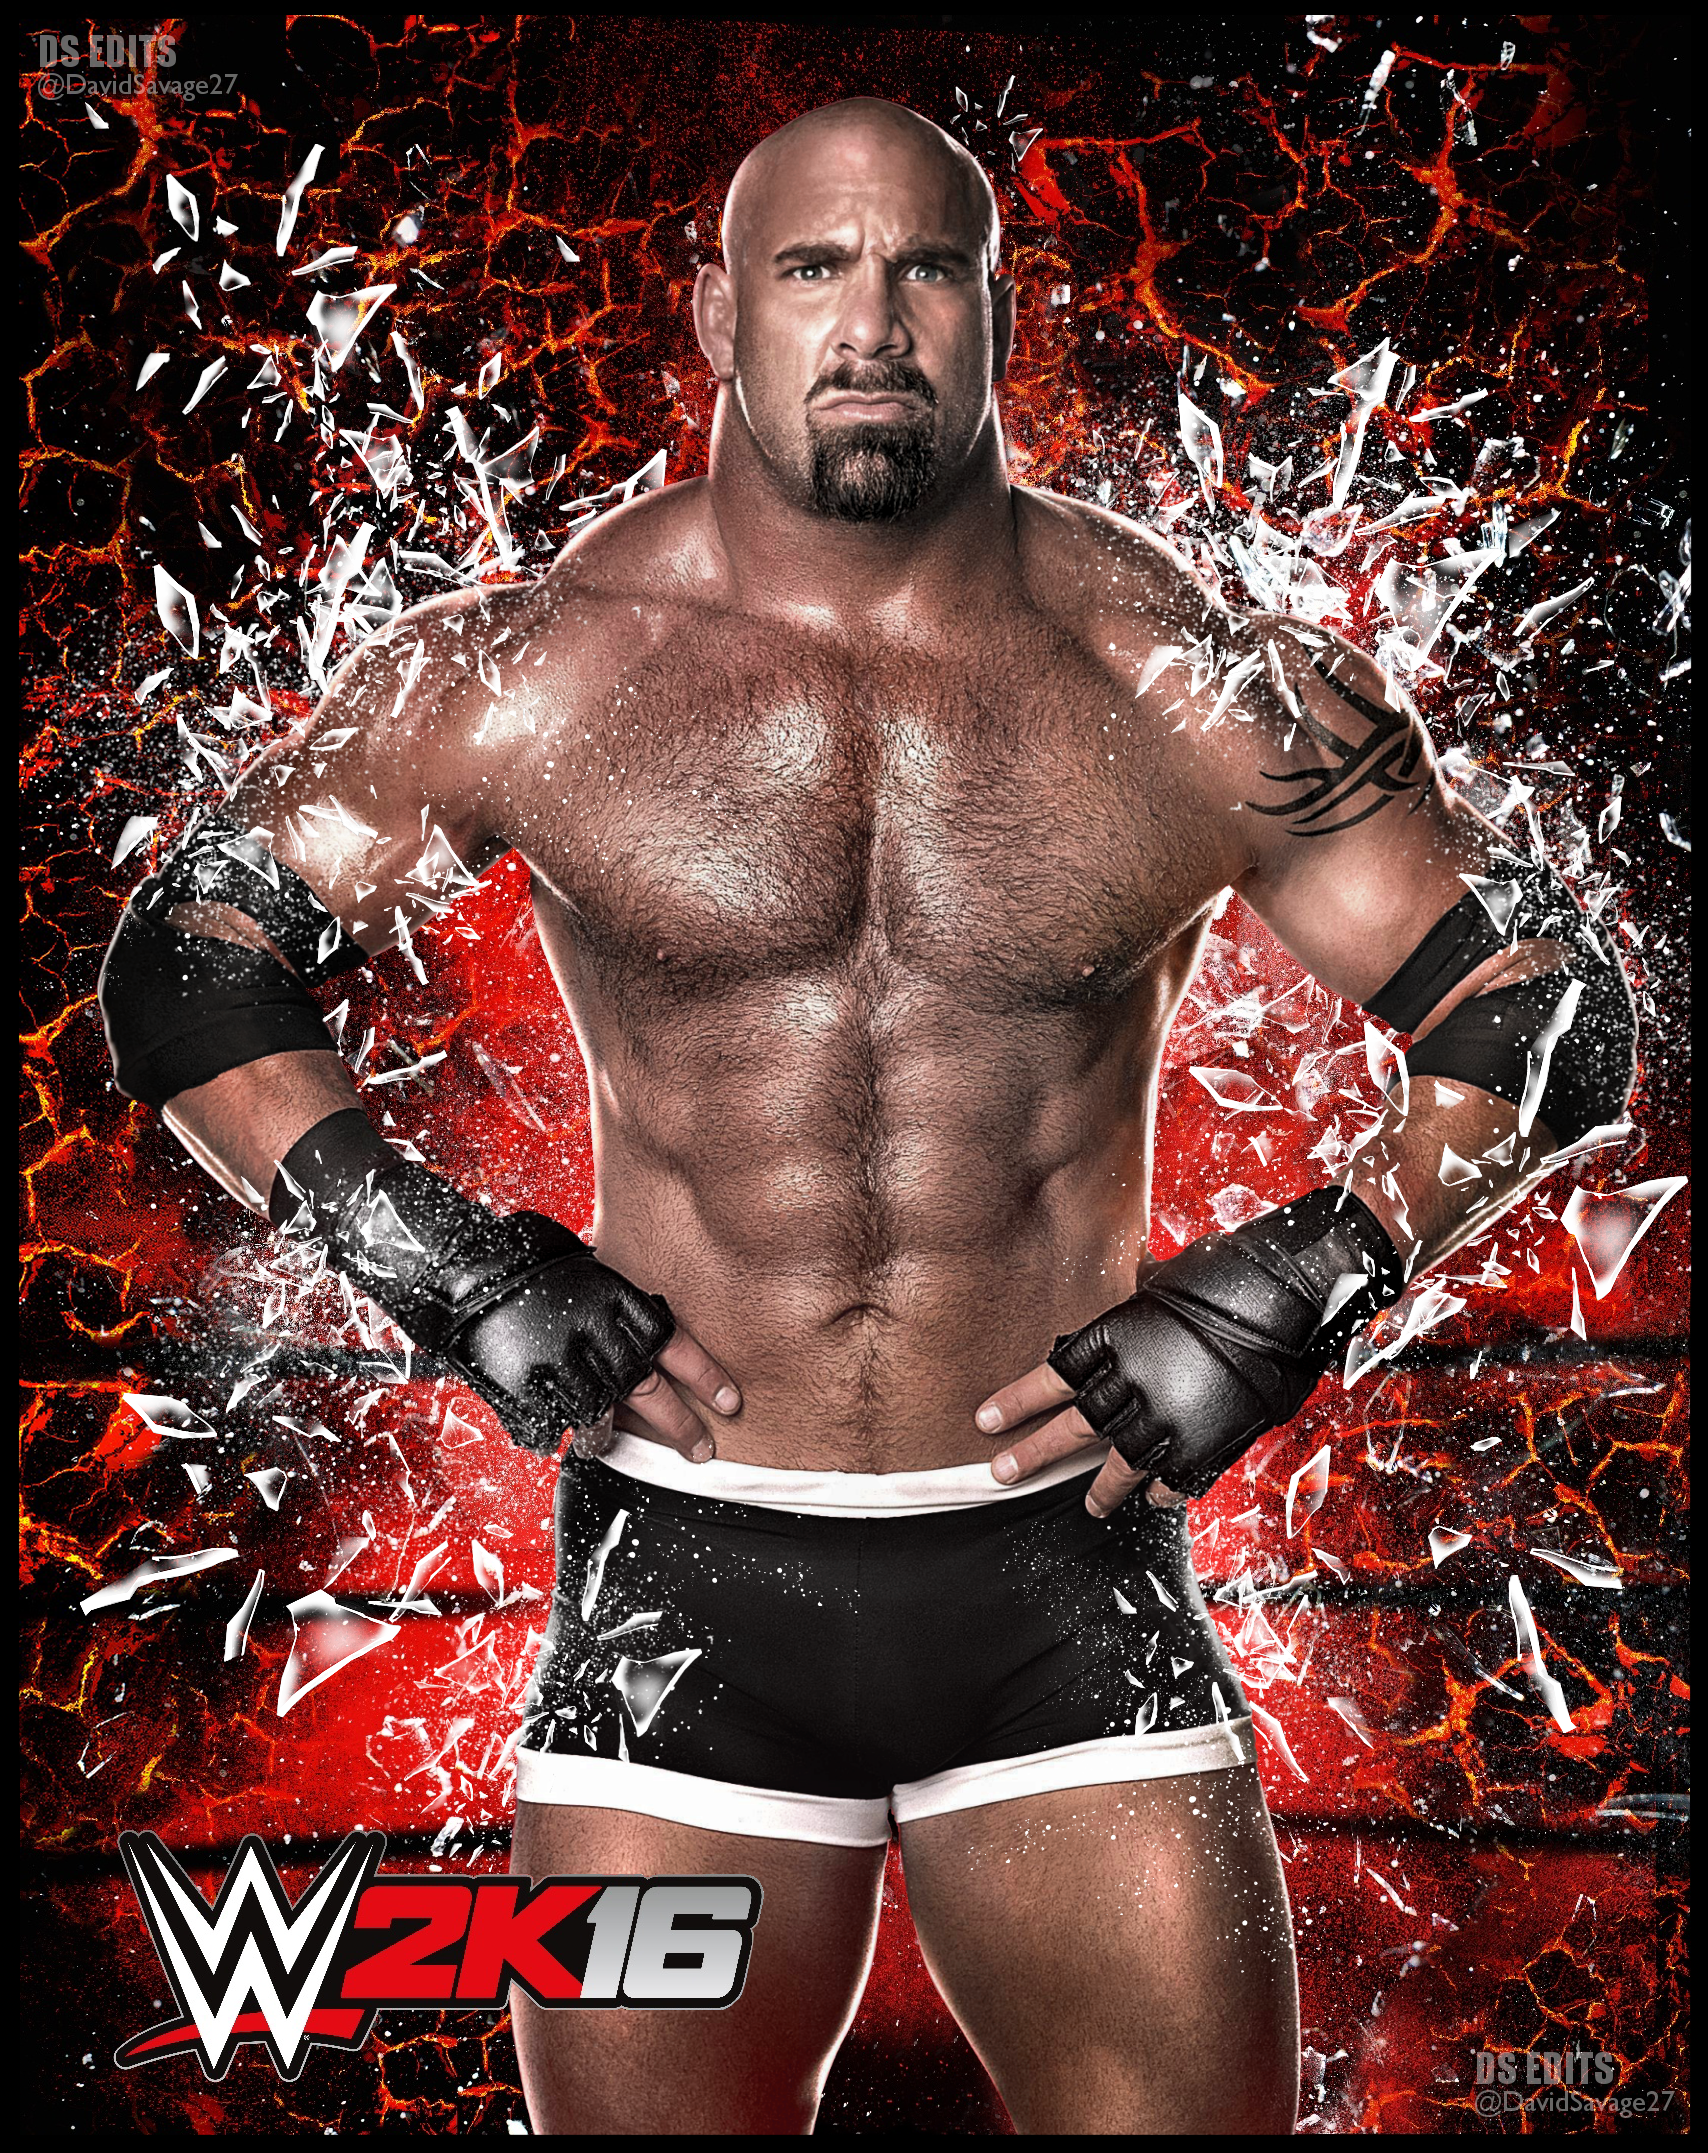 WWE 2K16 Goldberg by ultimate savage on DeviantArt